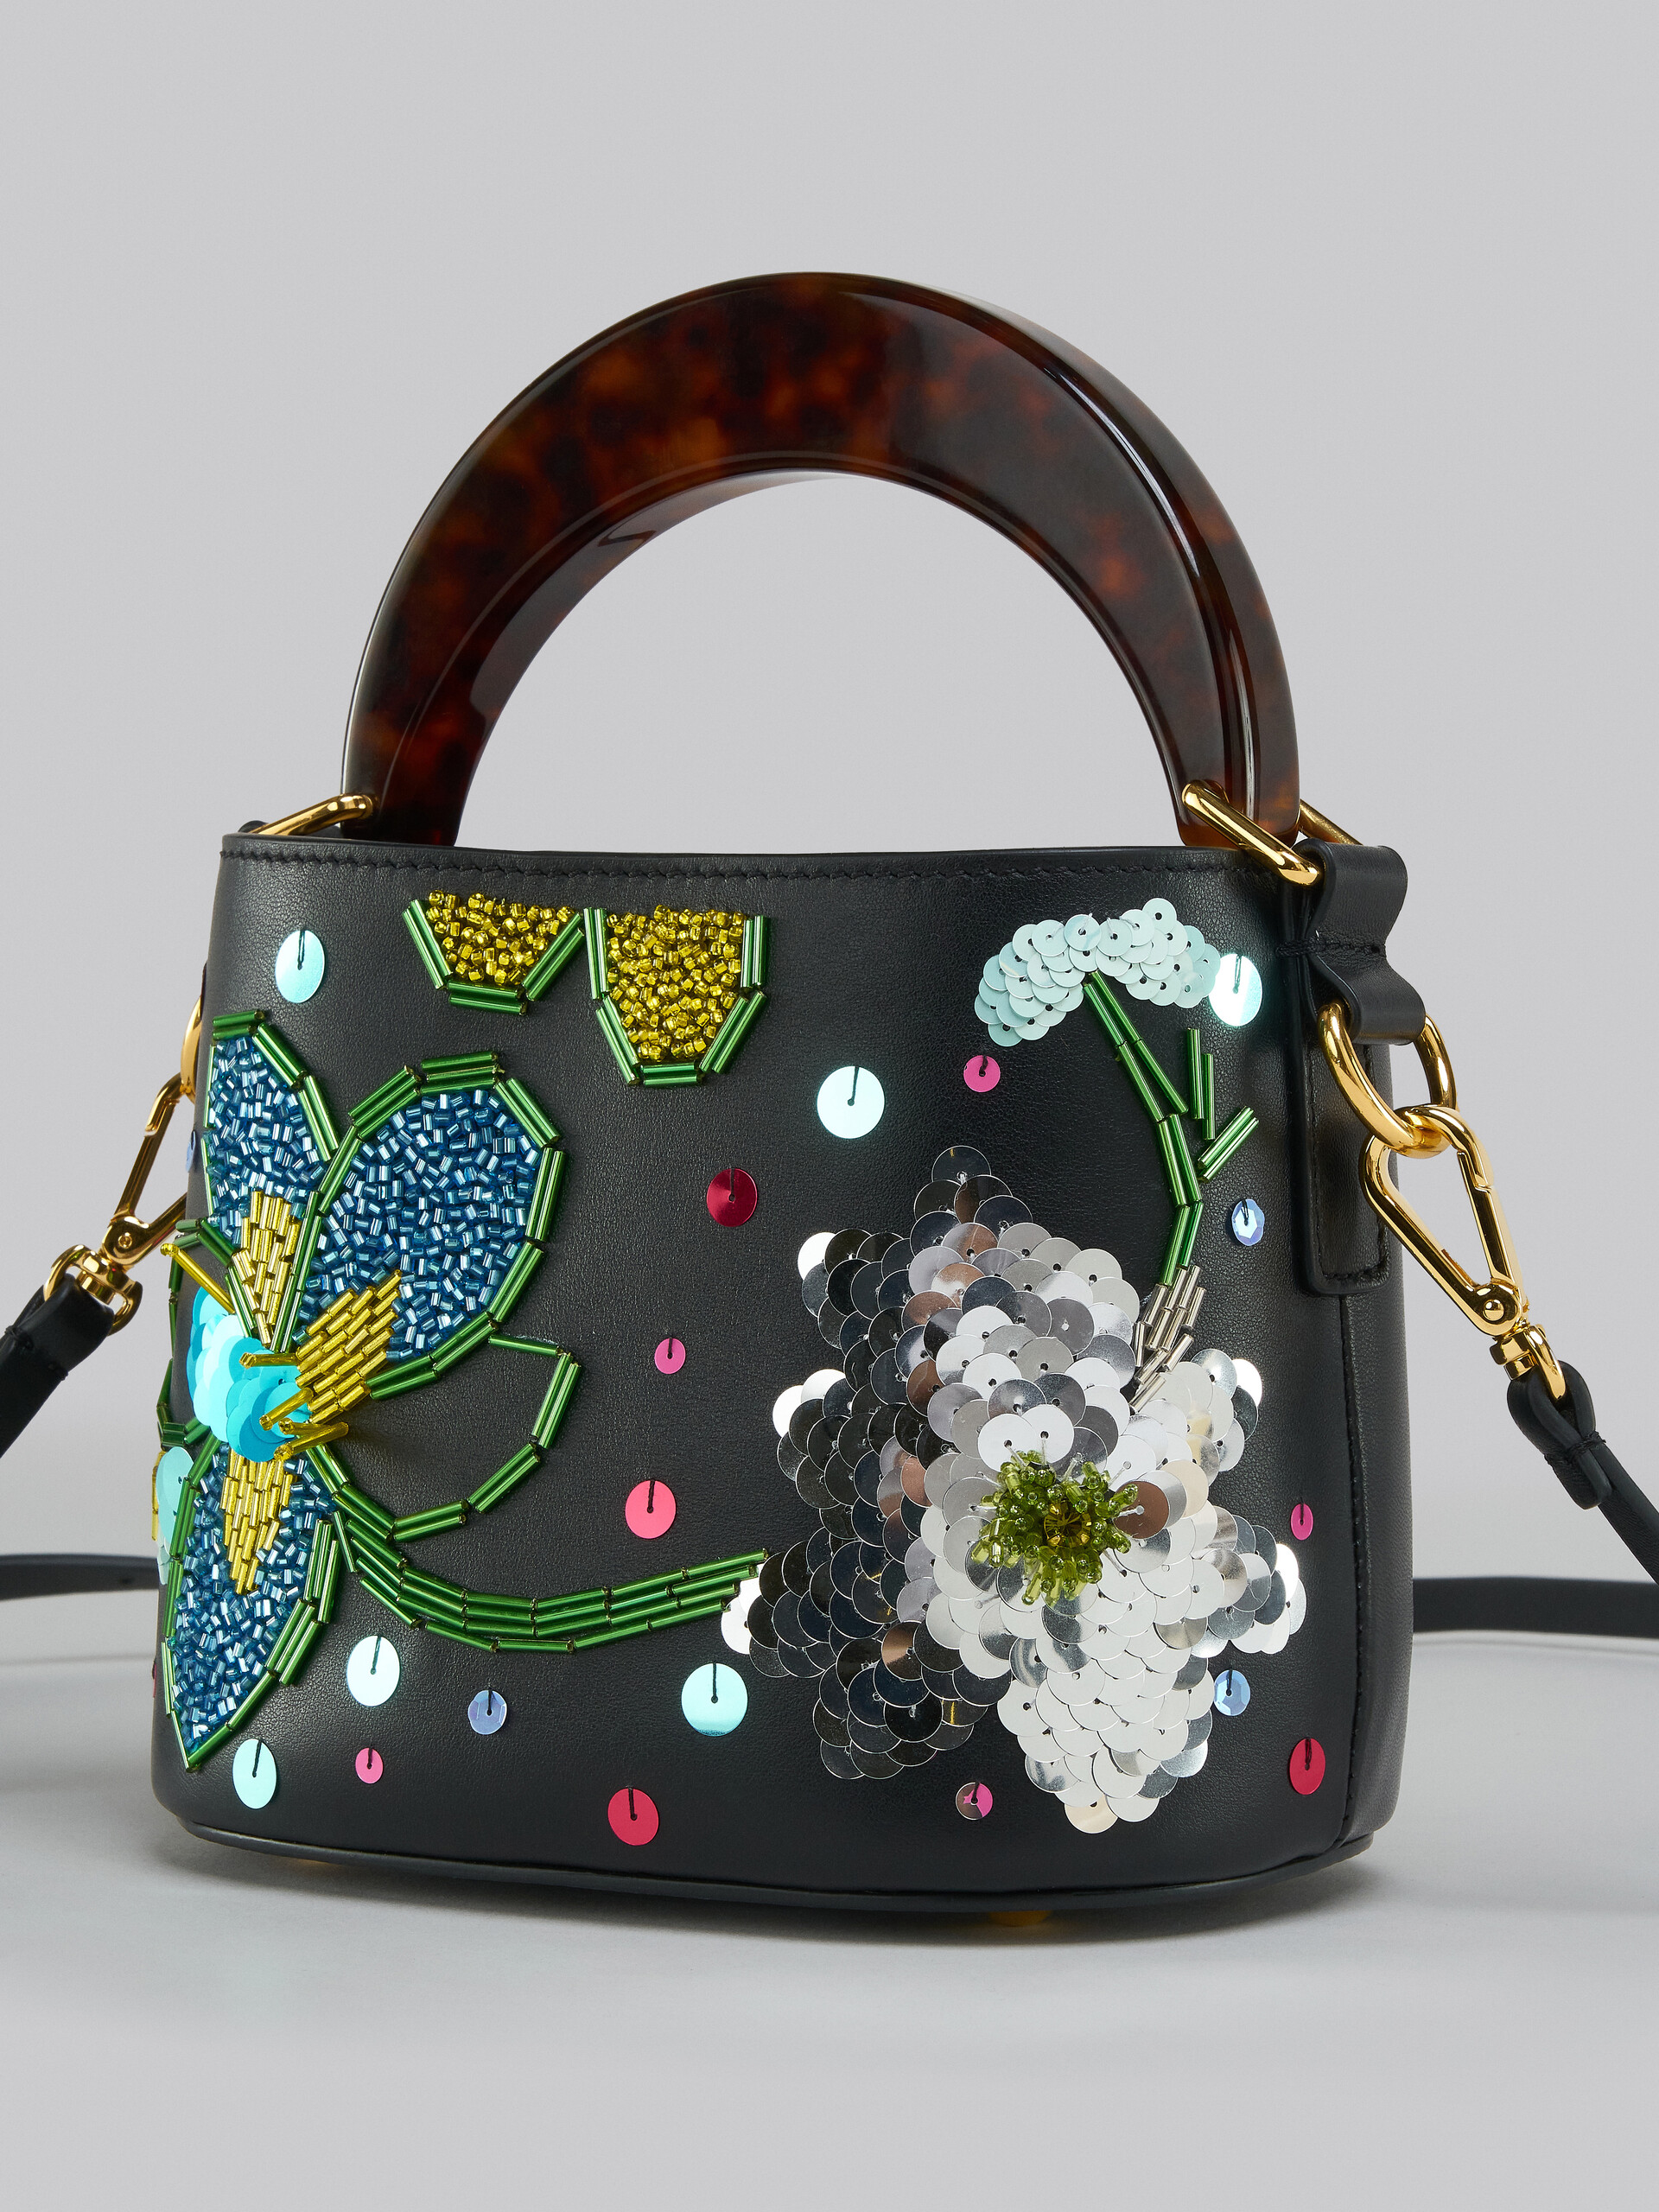 Venice Mini Bucket in embroidered black leather - Shoulder Bag - Image 4